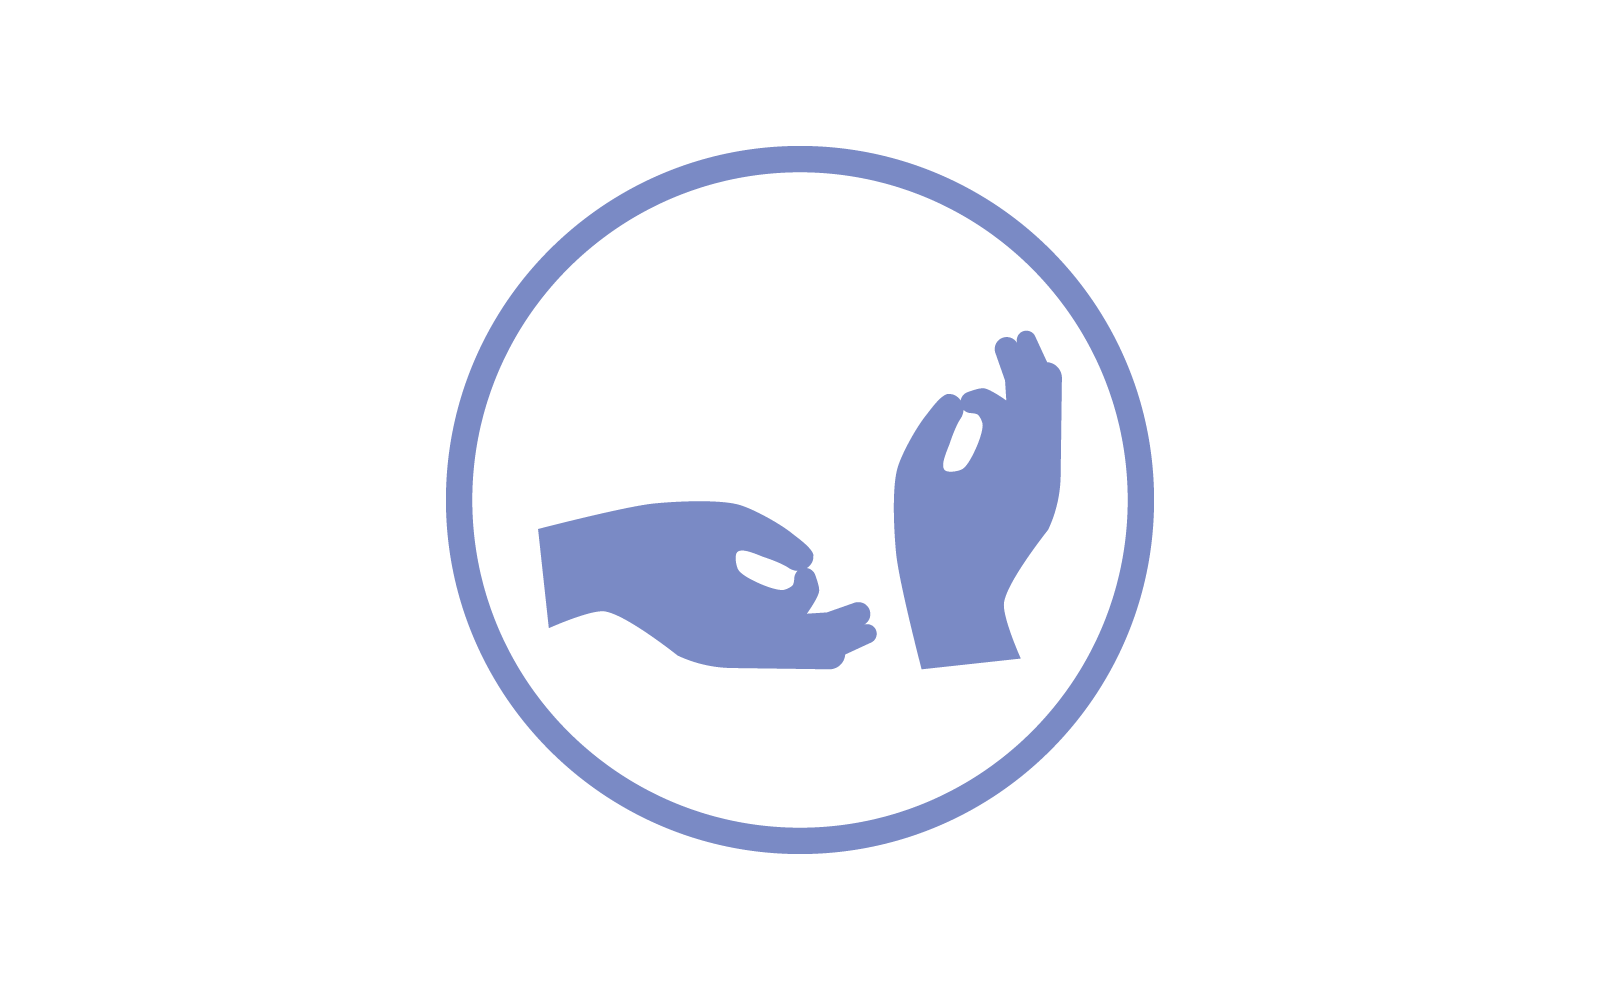 Meditation yoga arm illustration logo design